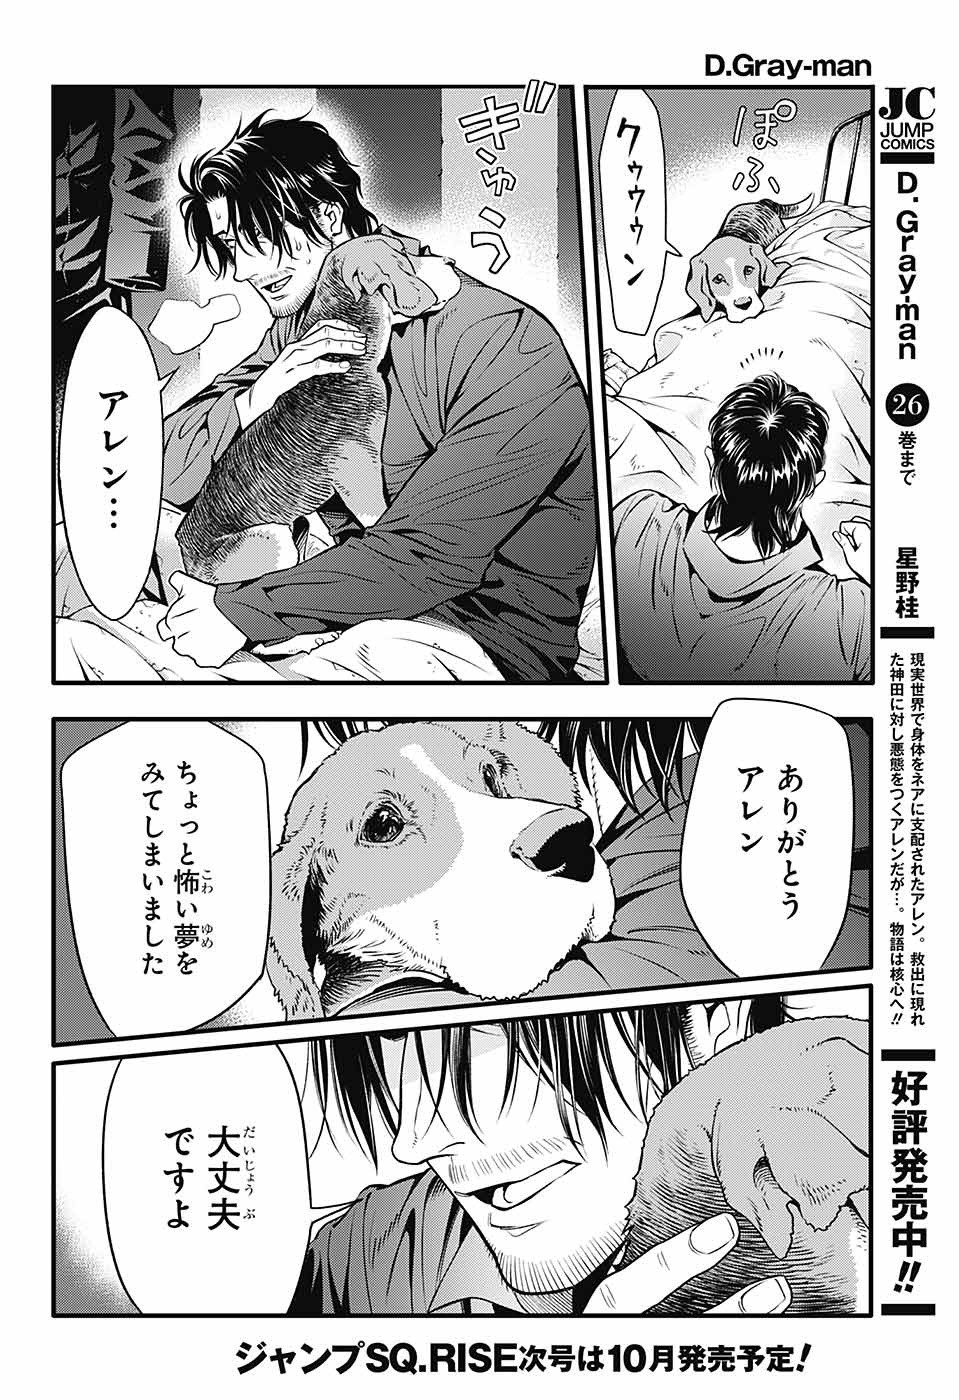 D Gray Man Chapter 233 Page 37 Raw Manga 生漫画